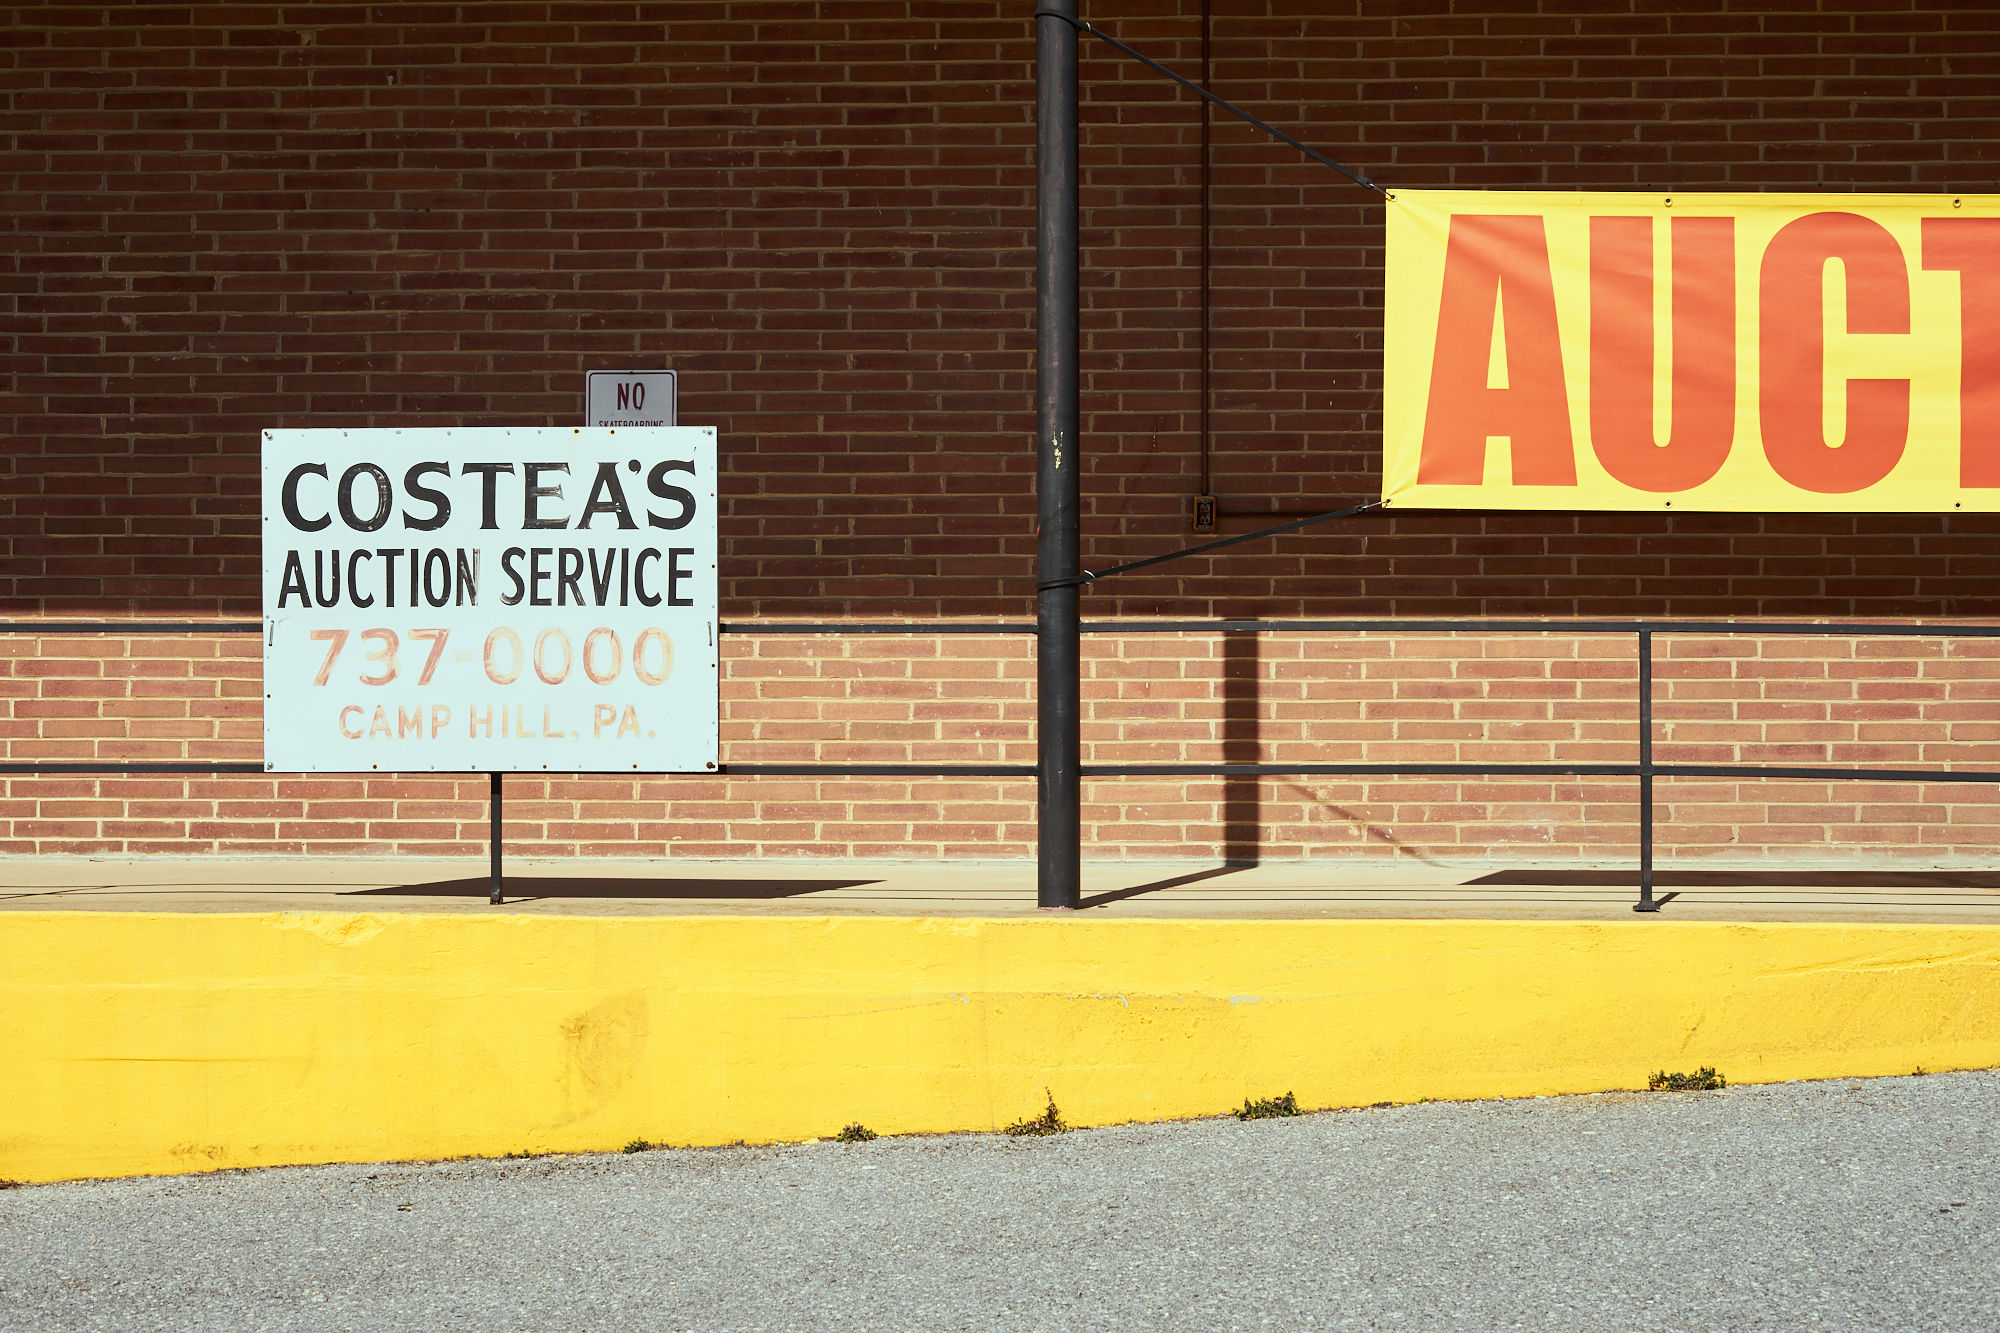 Costea's Auction Service - fine art street photography, Camp Hill, Pennsylvania